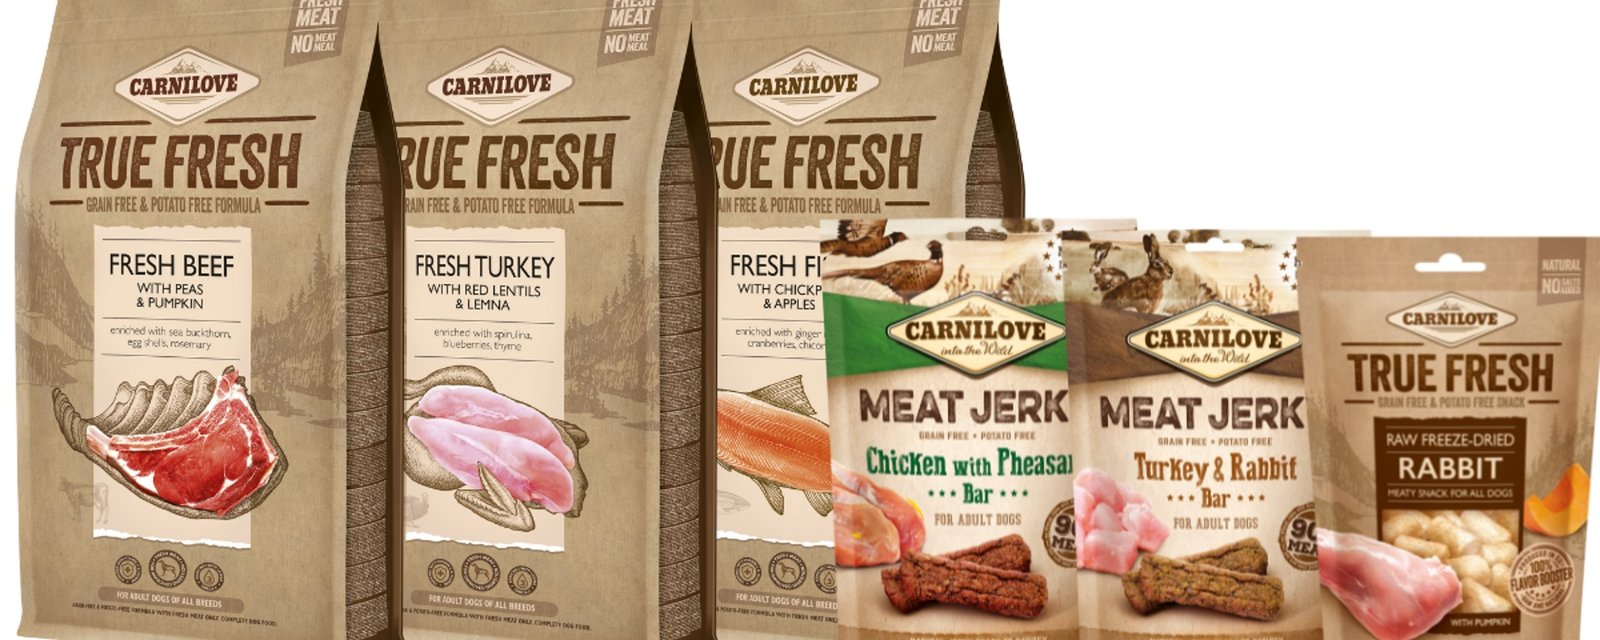 Carnilove unveils True Fresh dog food range and snacks